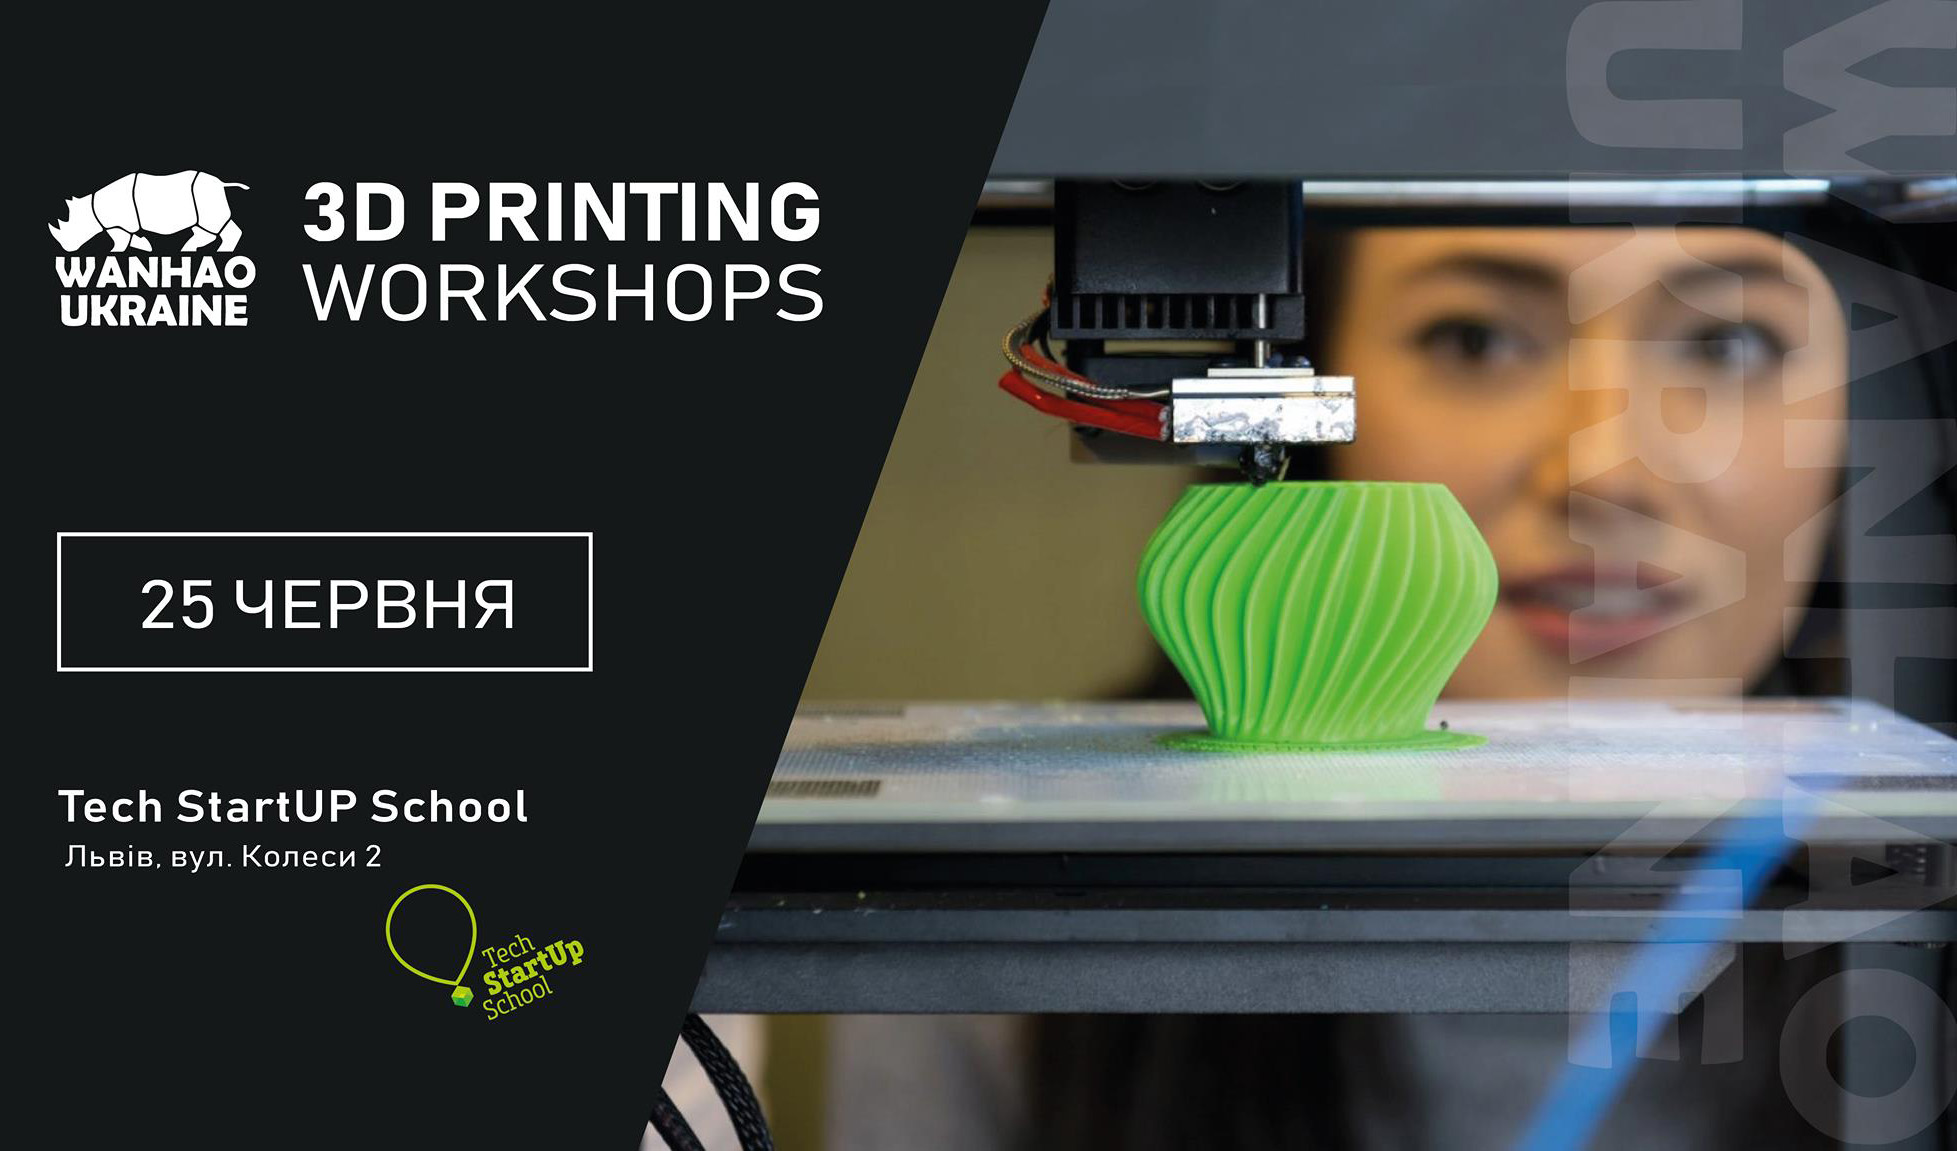 3D printing workshops